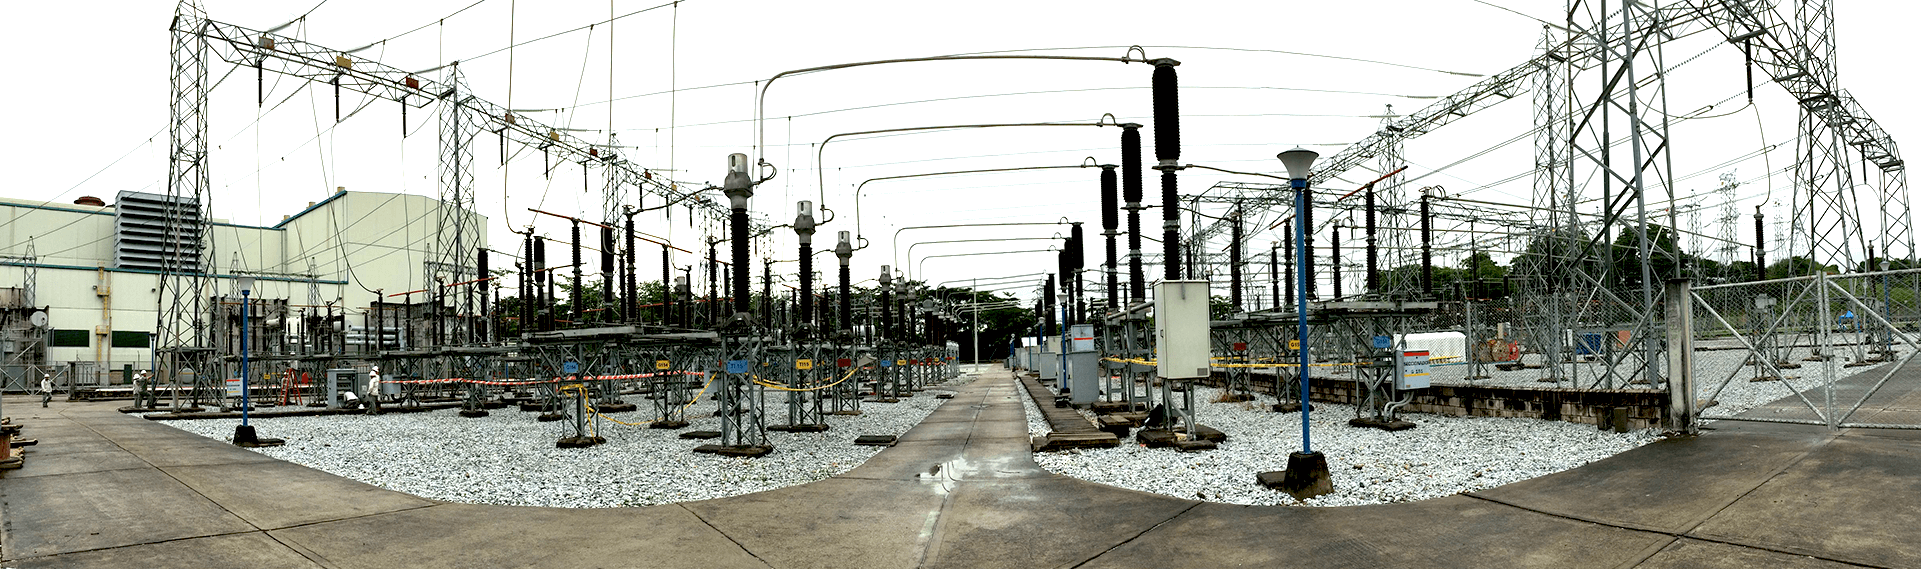 Central Termoeléctrica La Sierra